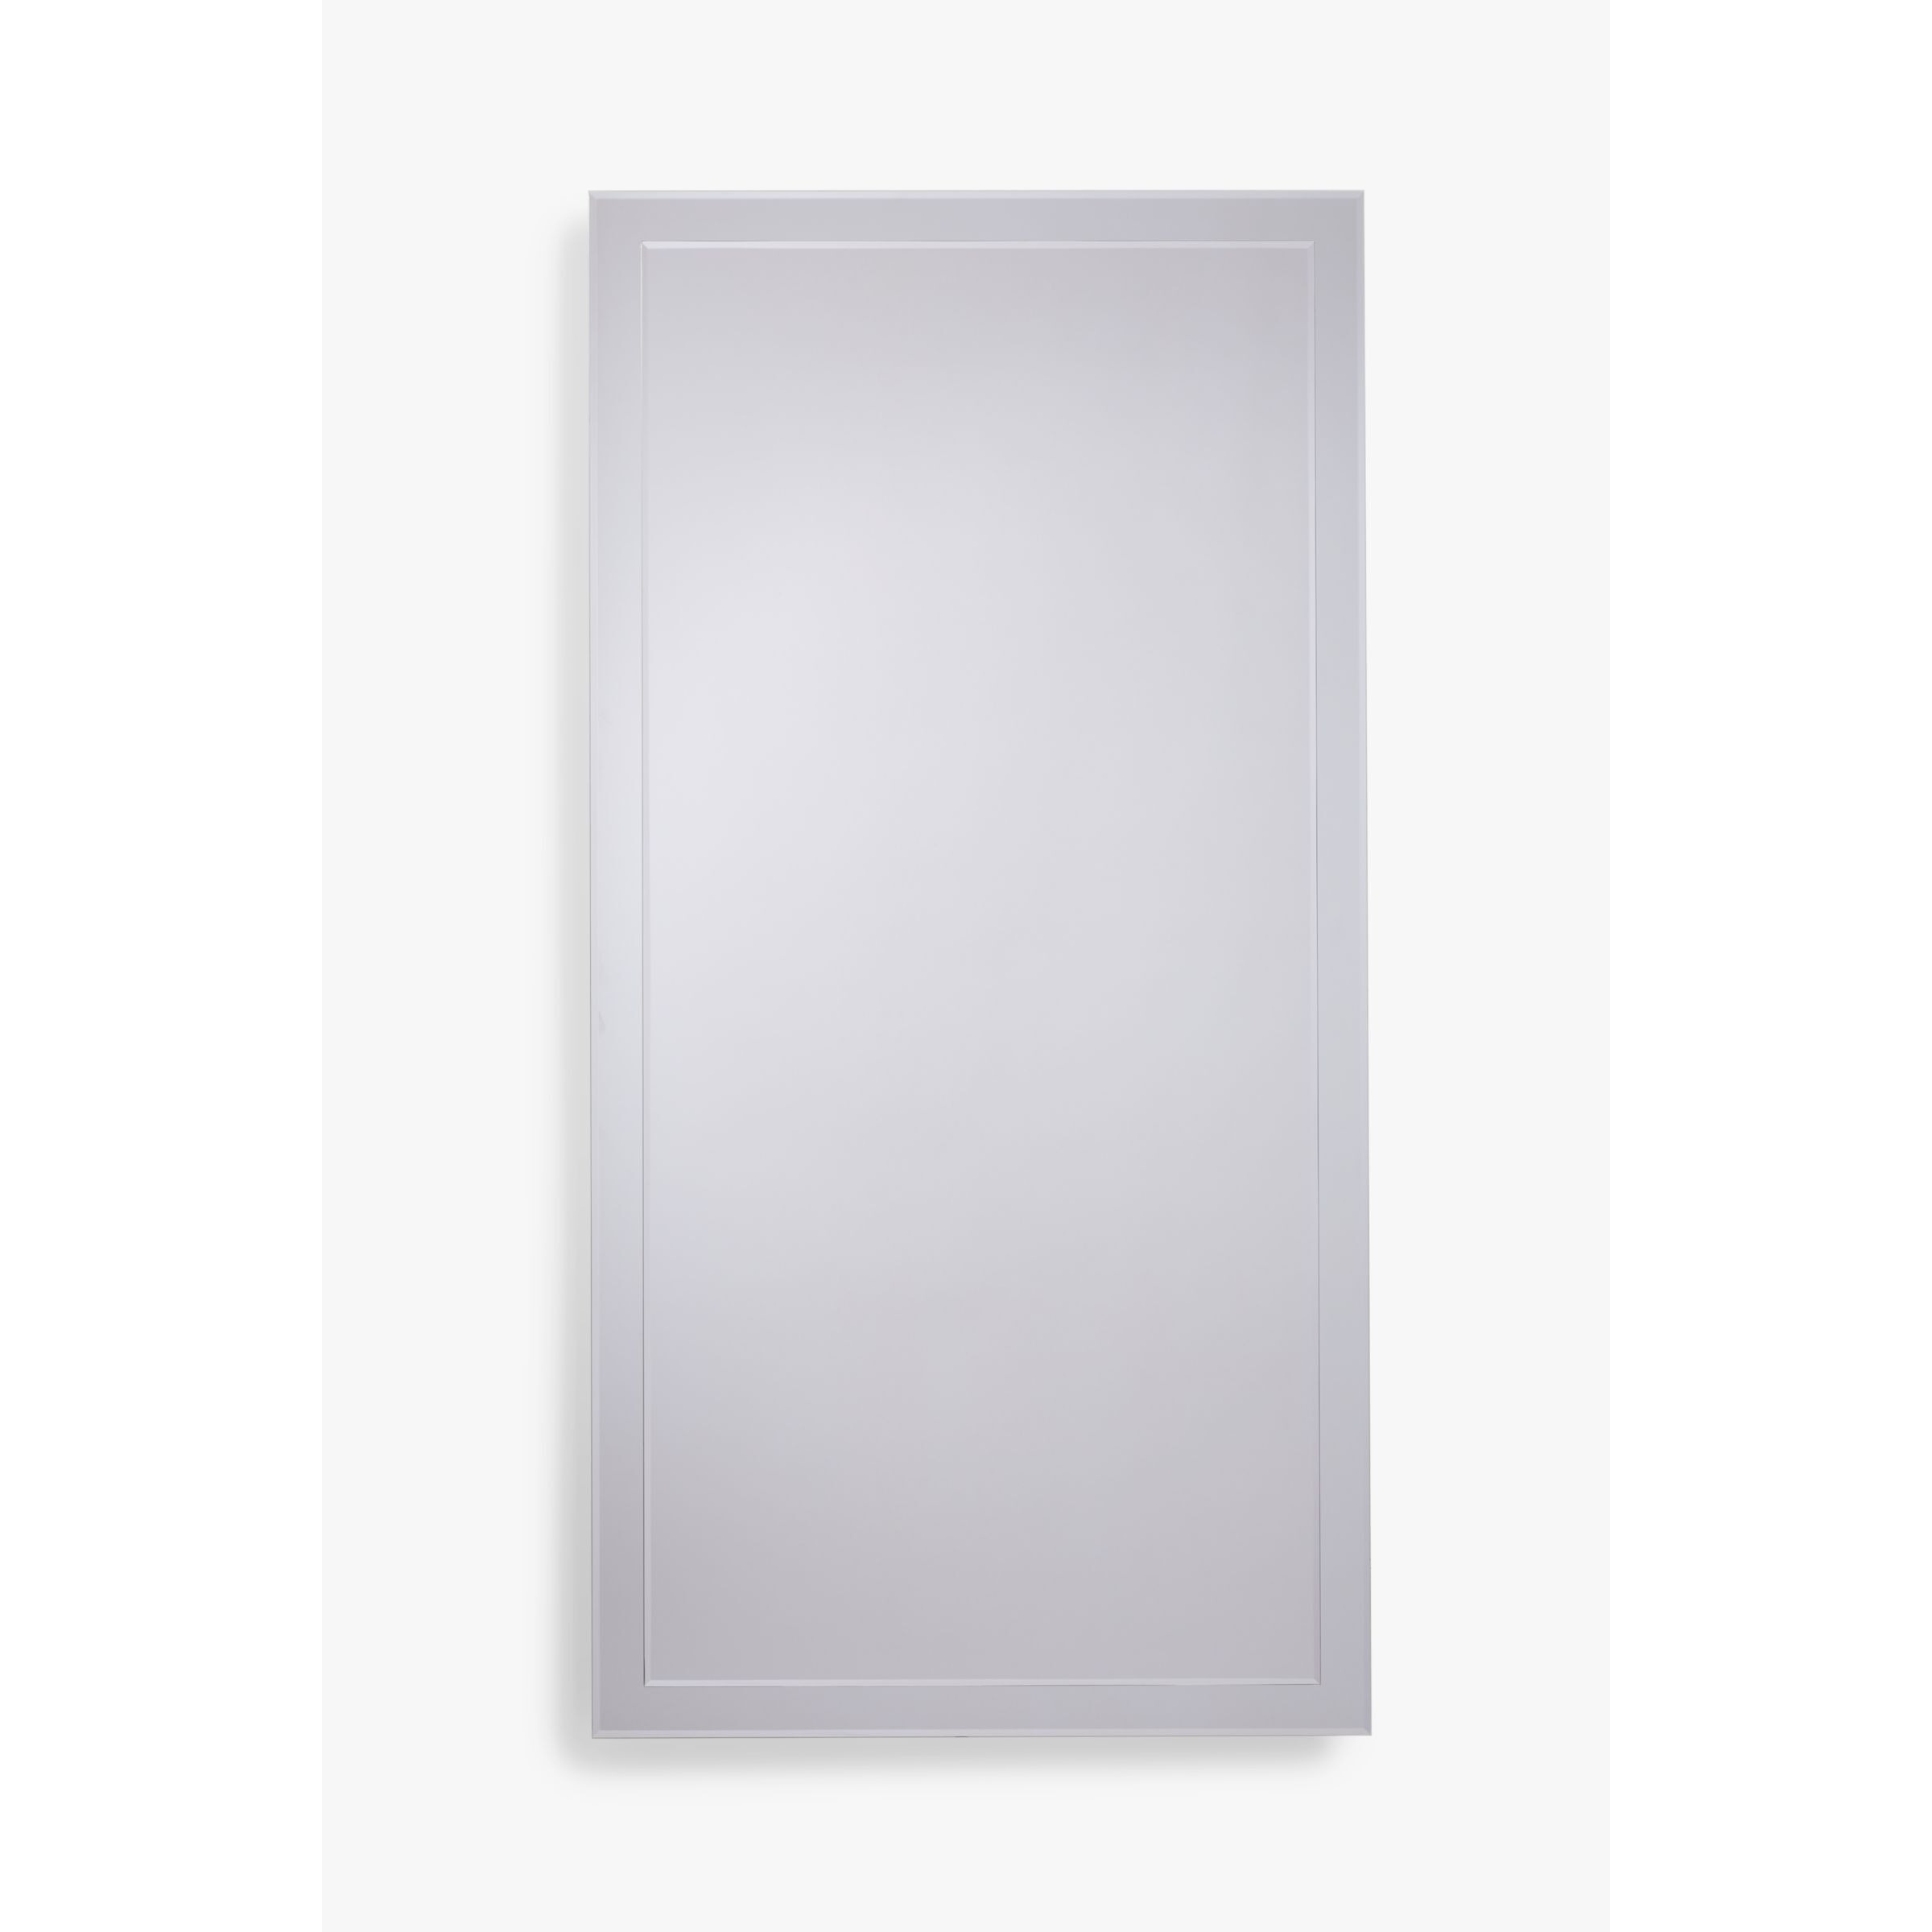 John Lewis Duo Bathroom Mirror - image 1